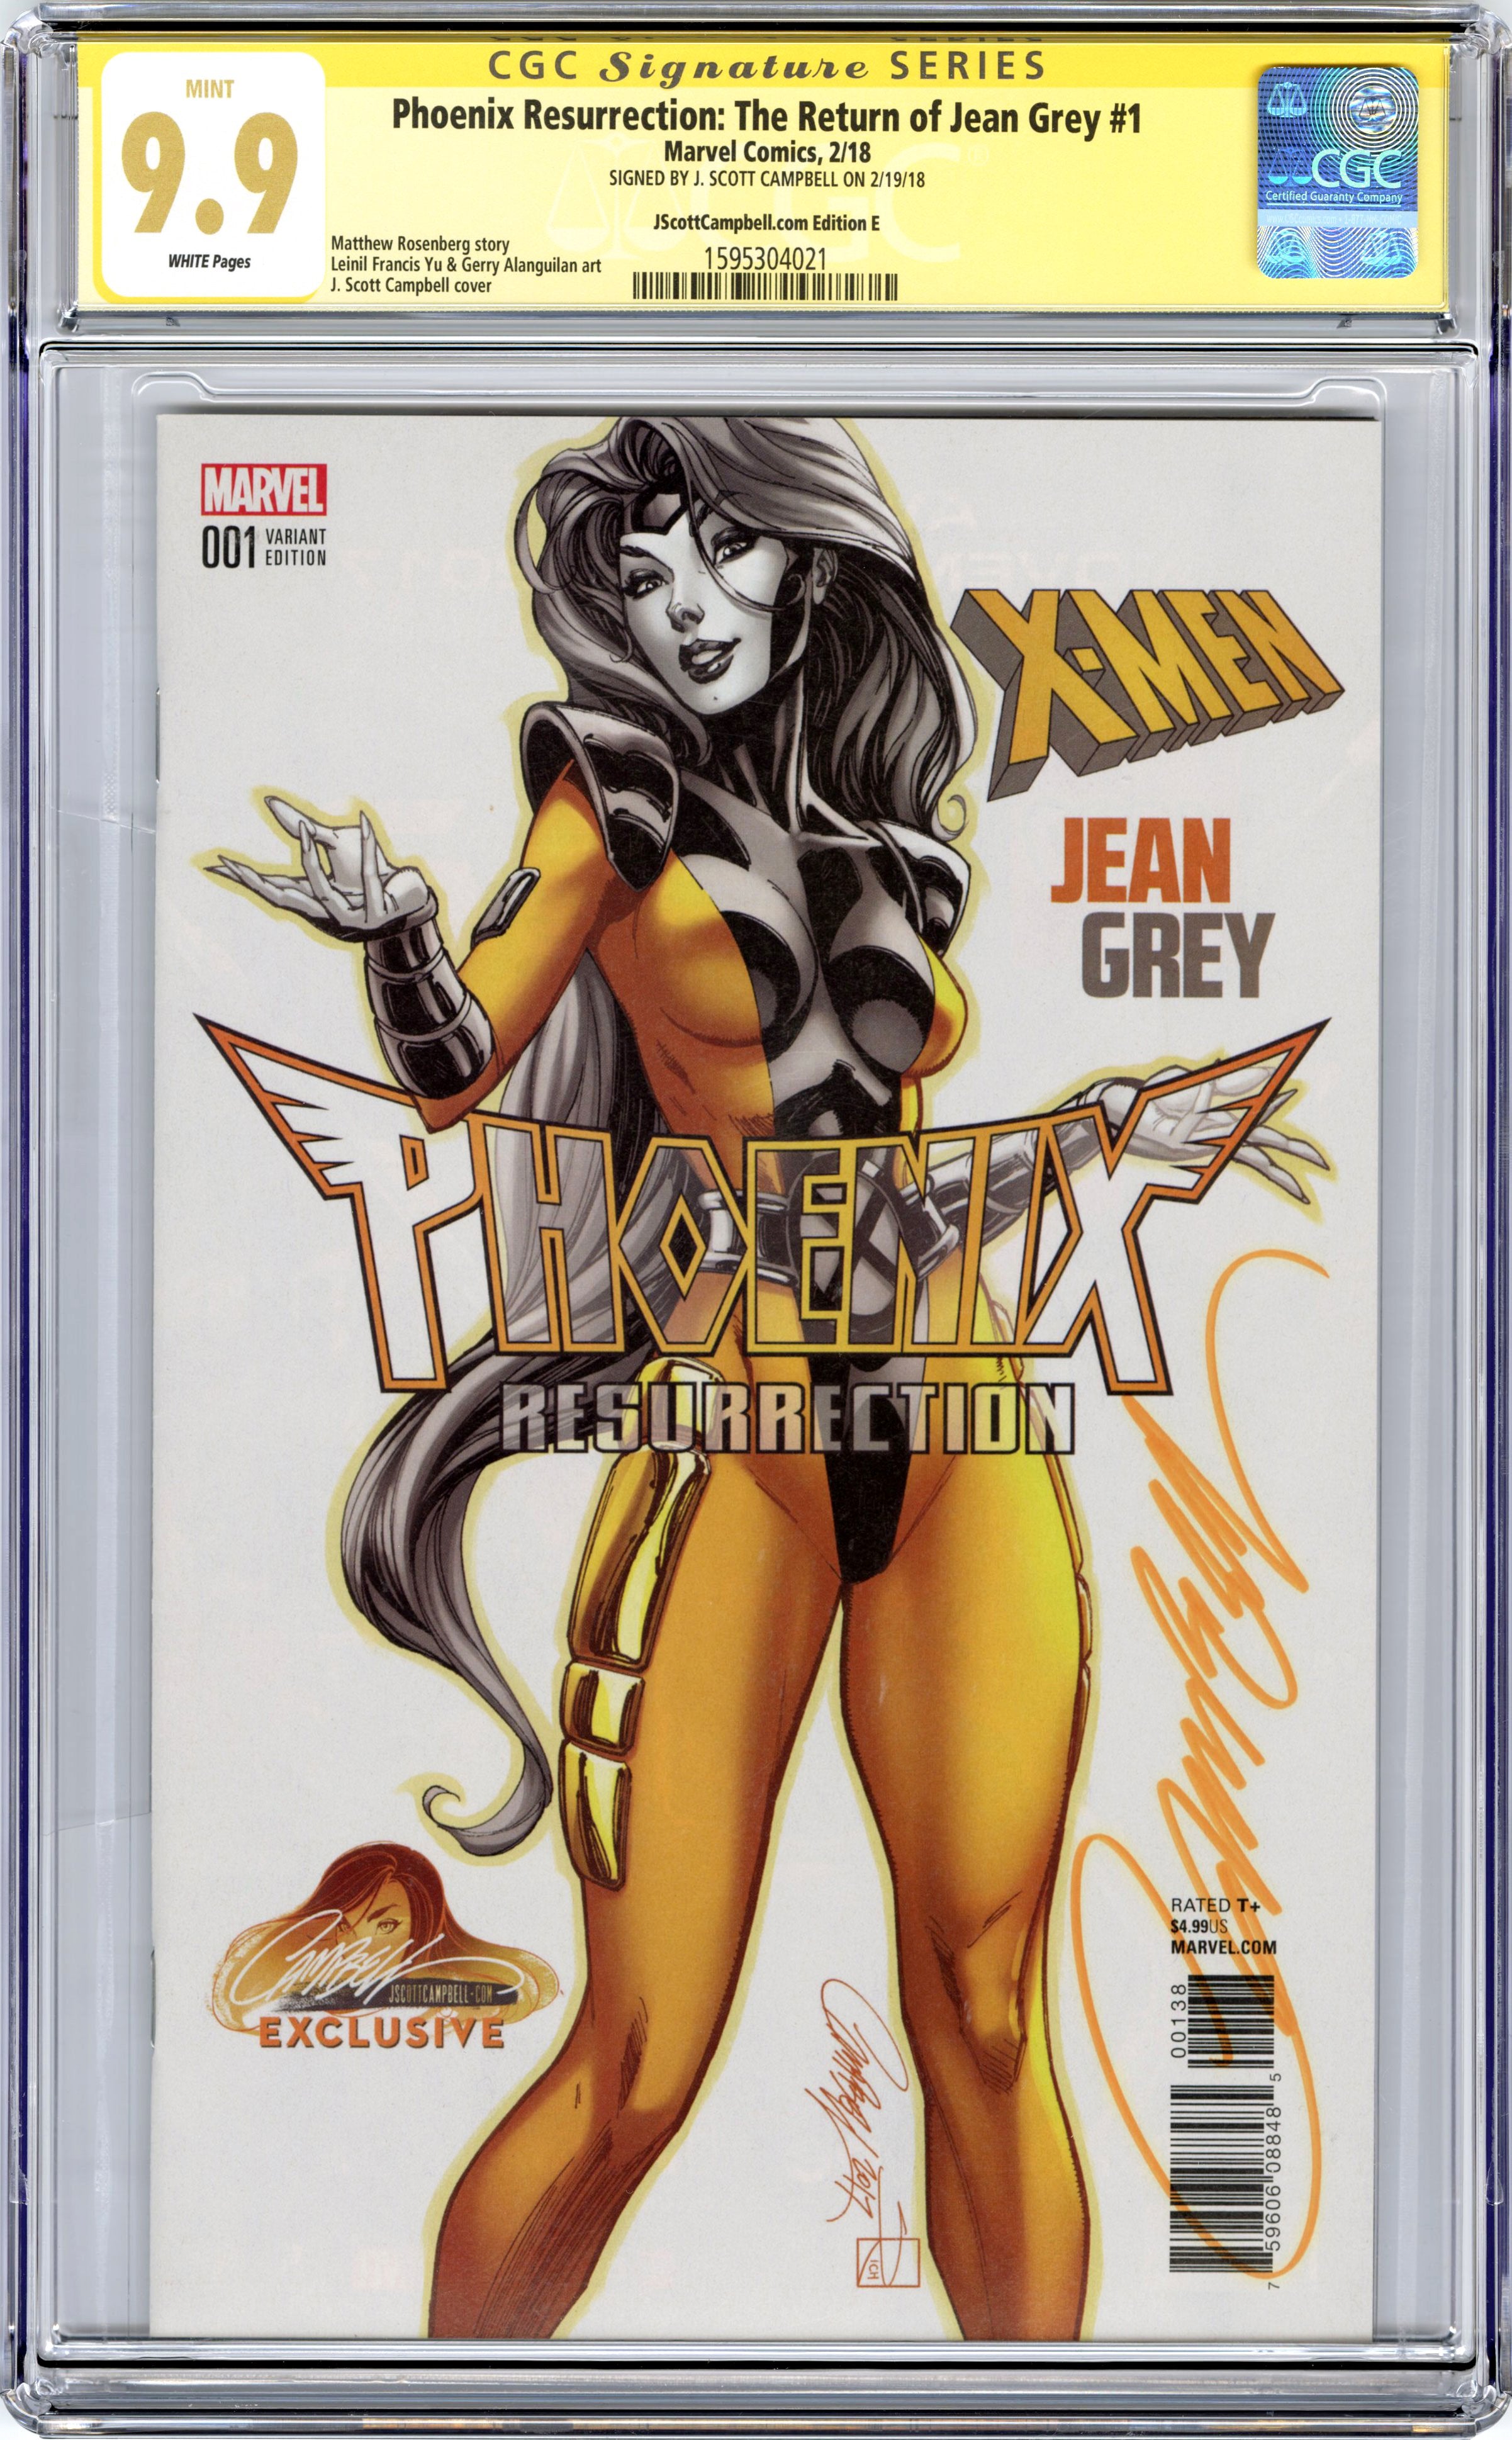 CGC **9.9** SS Phoenix Resurrection: The Return of Jean Grey #1 cover E J. Scott Campbell